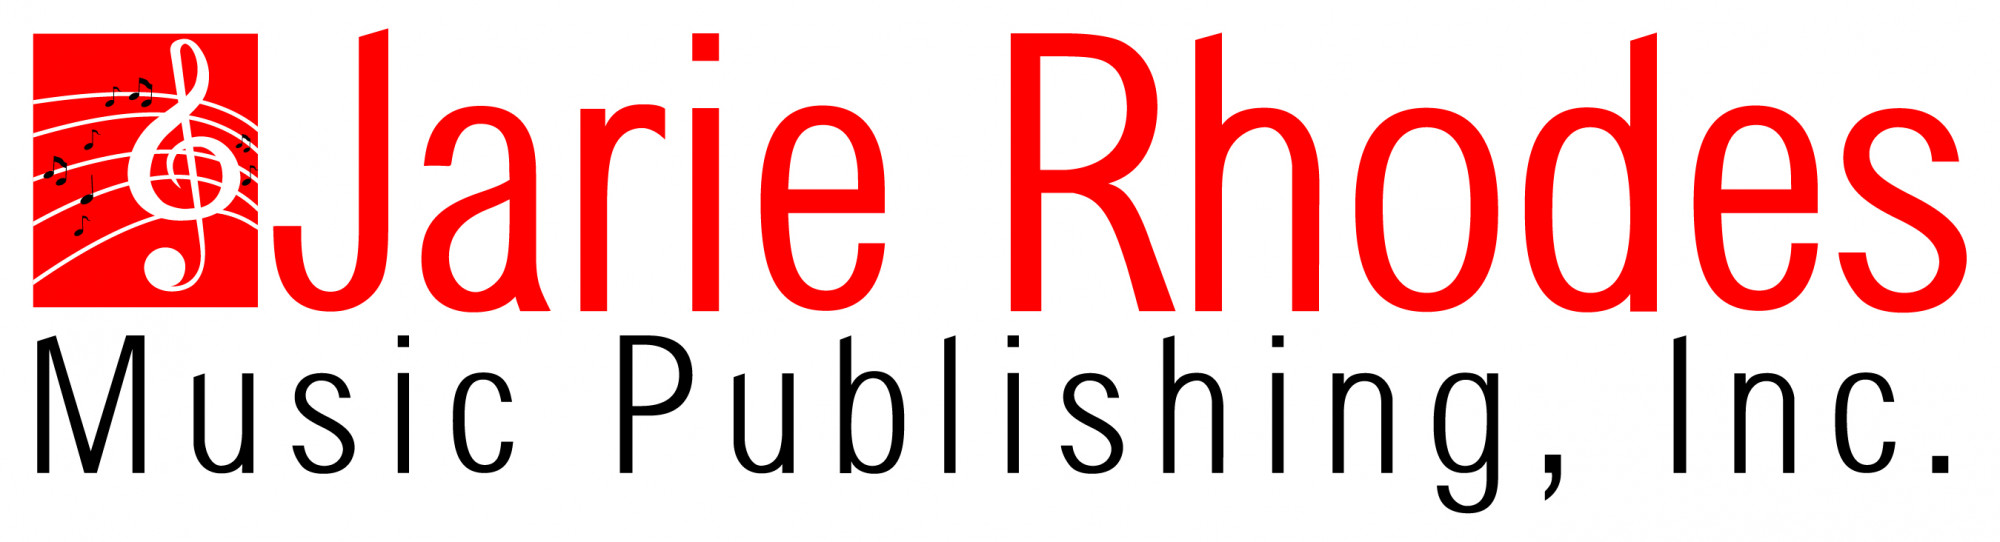 Jarie Rhodes Music Publishing Inc.